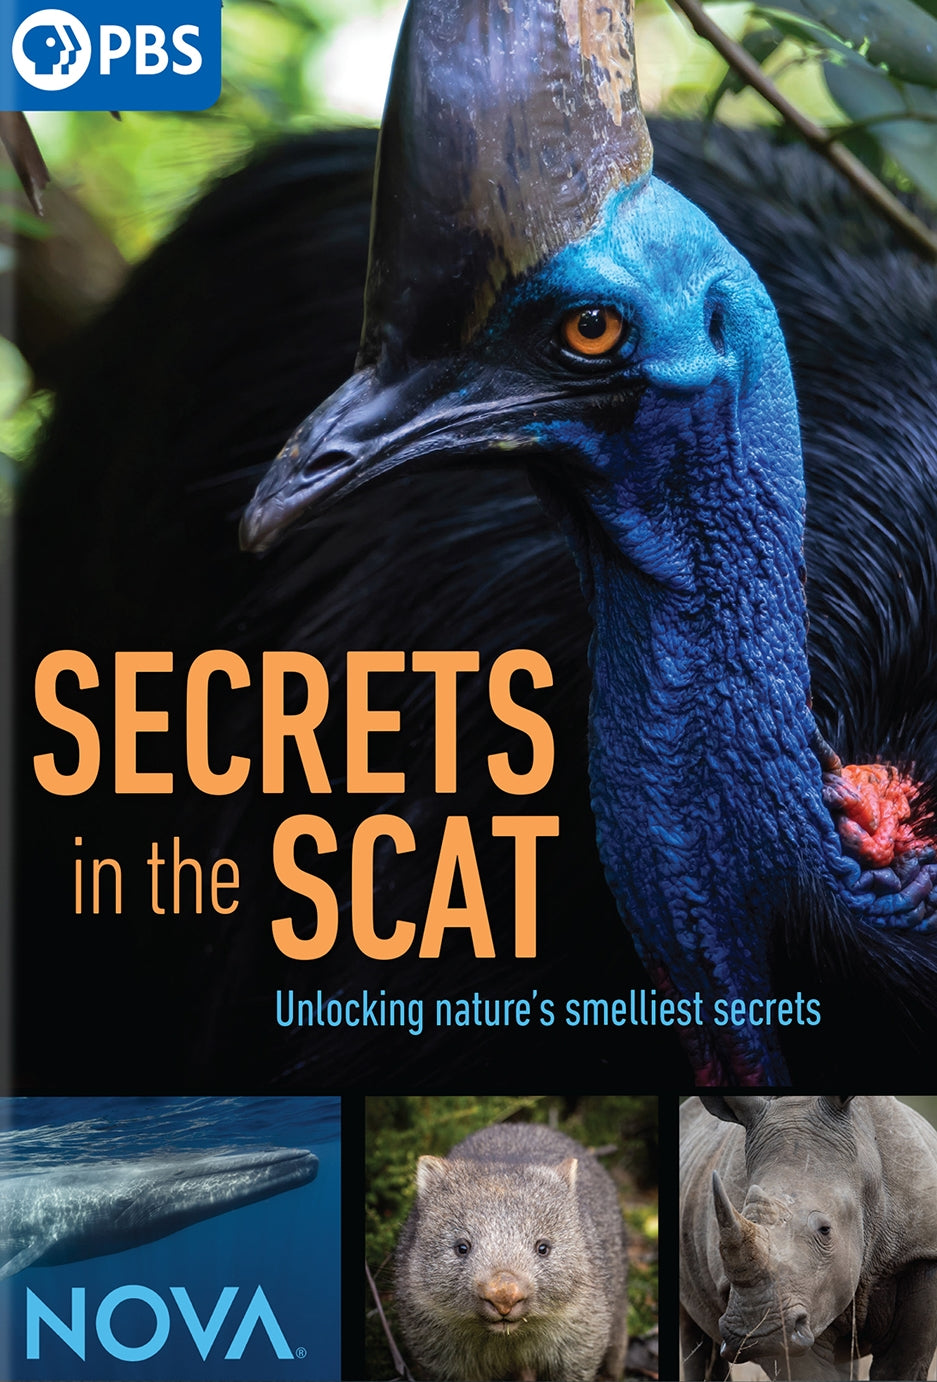 NOVA: Secrets in the Scat cover art